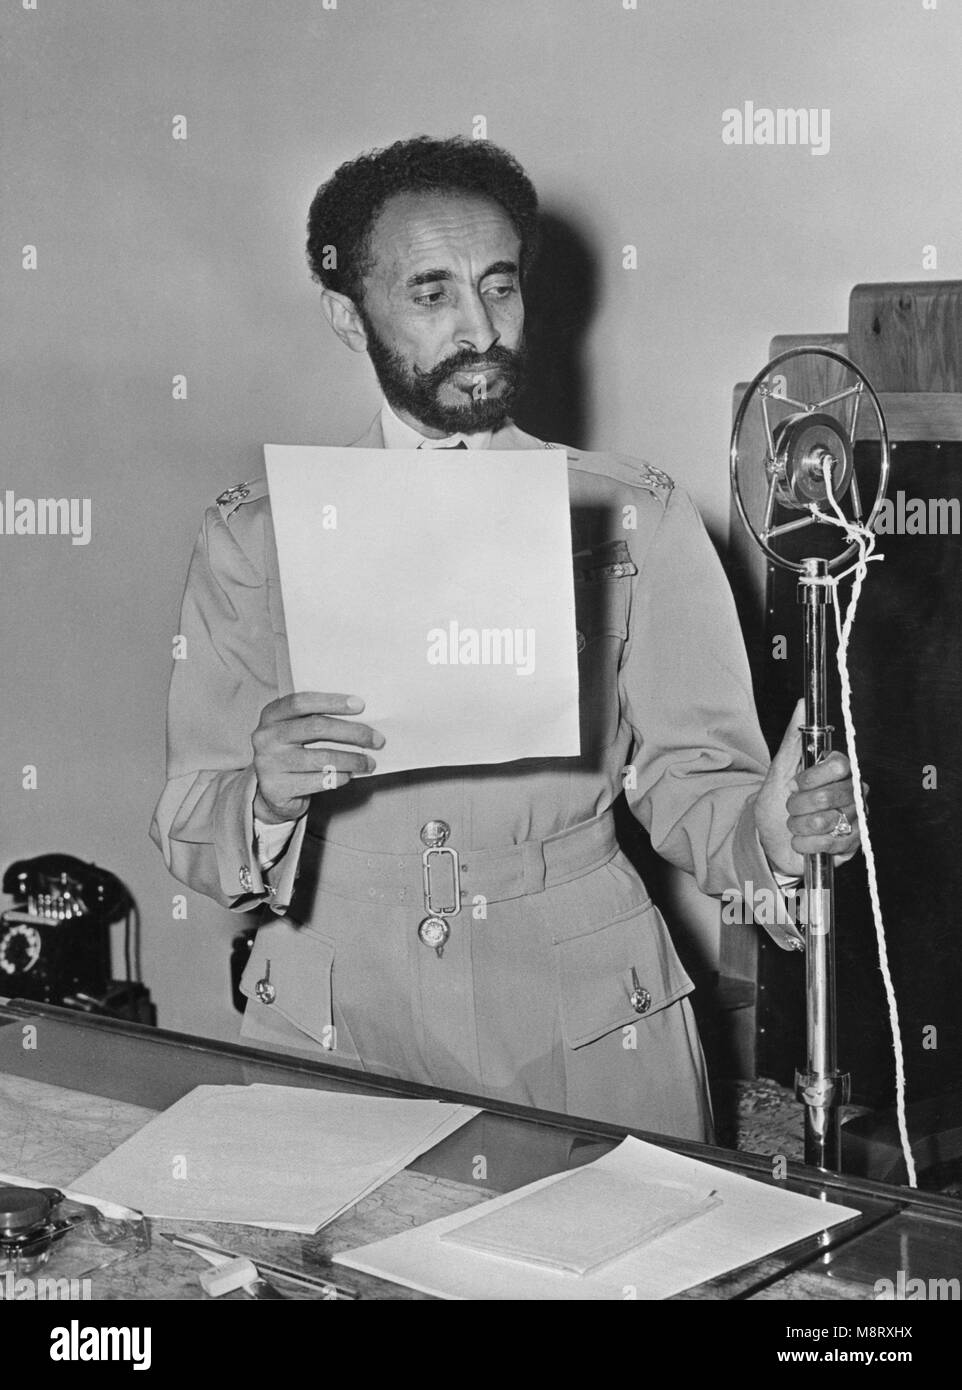 Radio ethiopia hi-res stock photography and images - Alamy